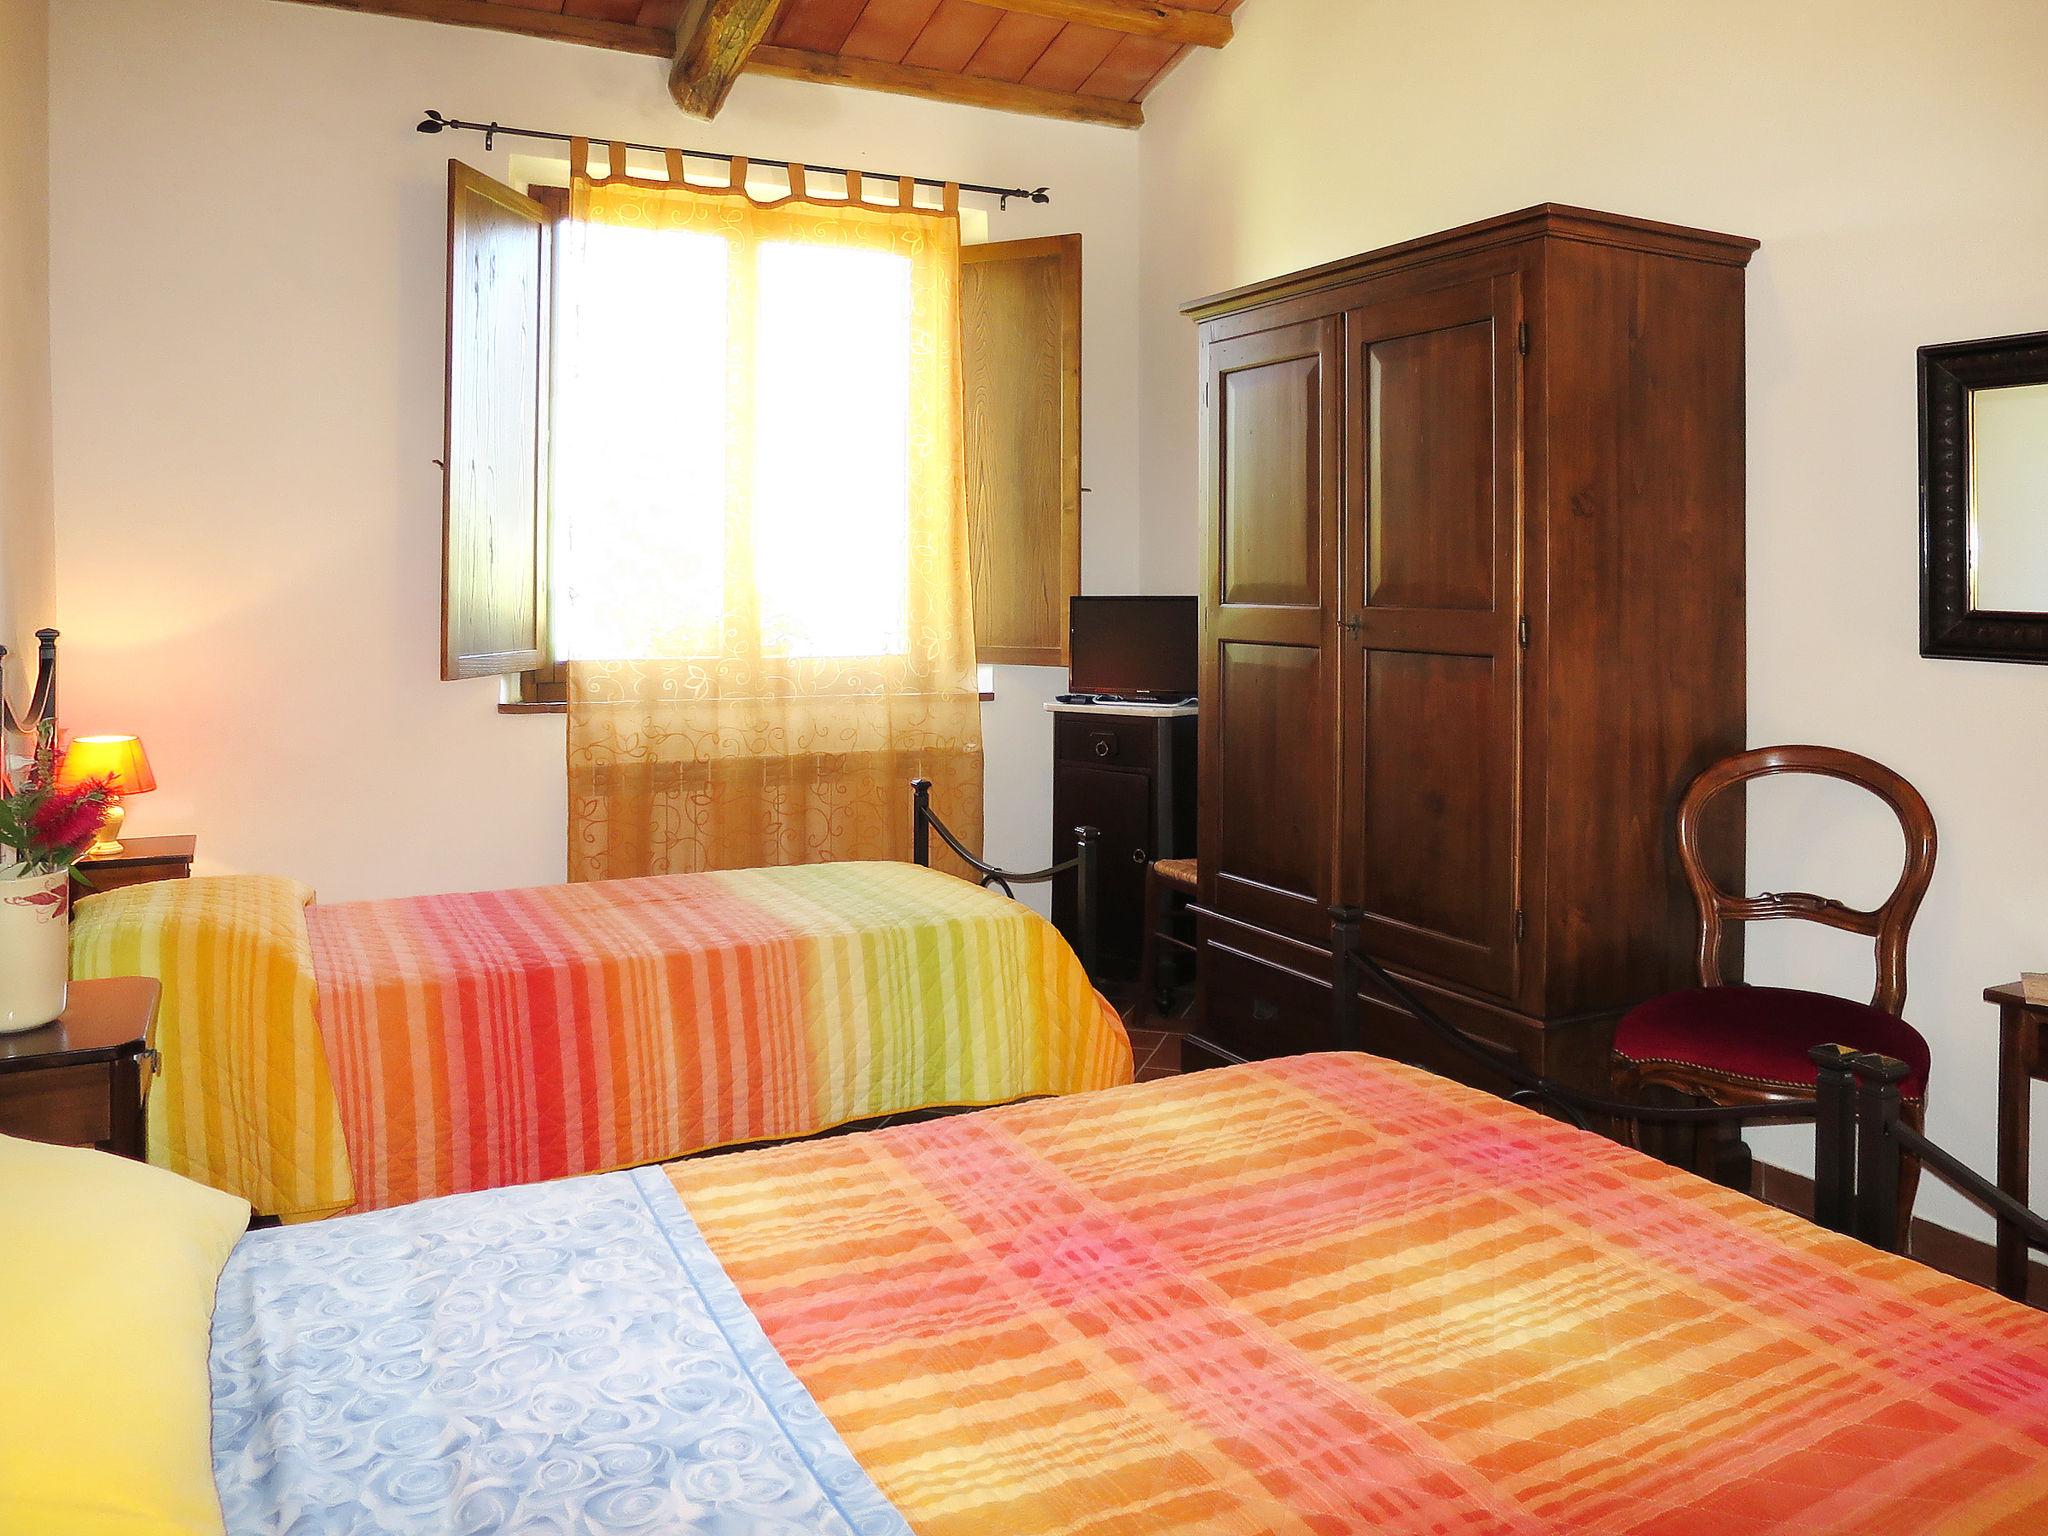 Photo 11 - Appartement de 3 chambres à Castelnuovo di Val di Cecina avec piscine et jardin